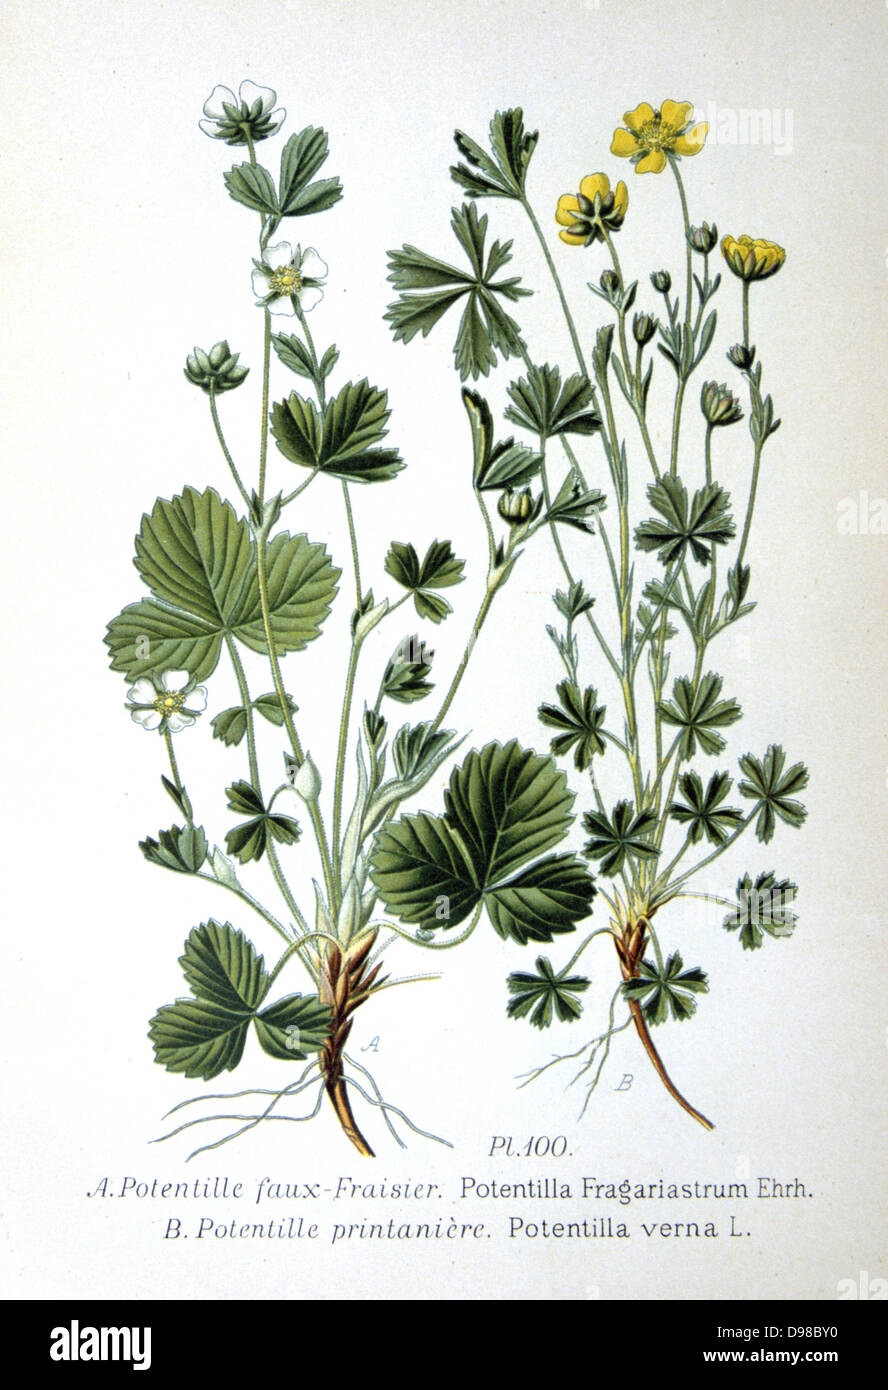 Karge Erdbeere (Potentilla Sterilis), links, und schleichende Potentilla (Potentilla Verna). Von Amédée Masclef 'Atlas des Plantes de France' Paris, 1893. Stockfoto